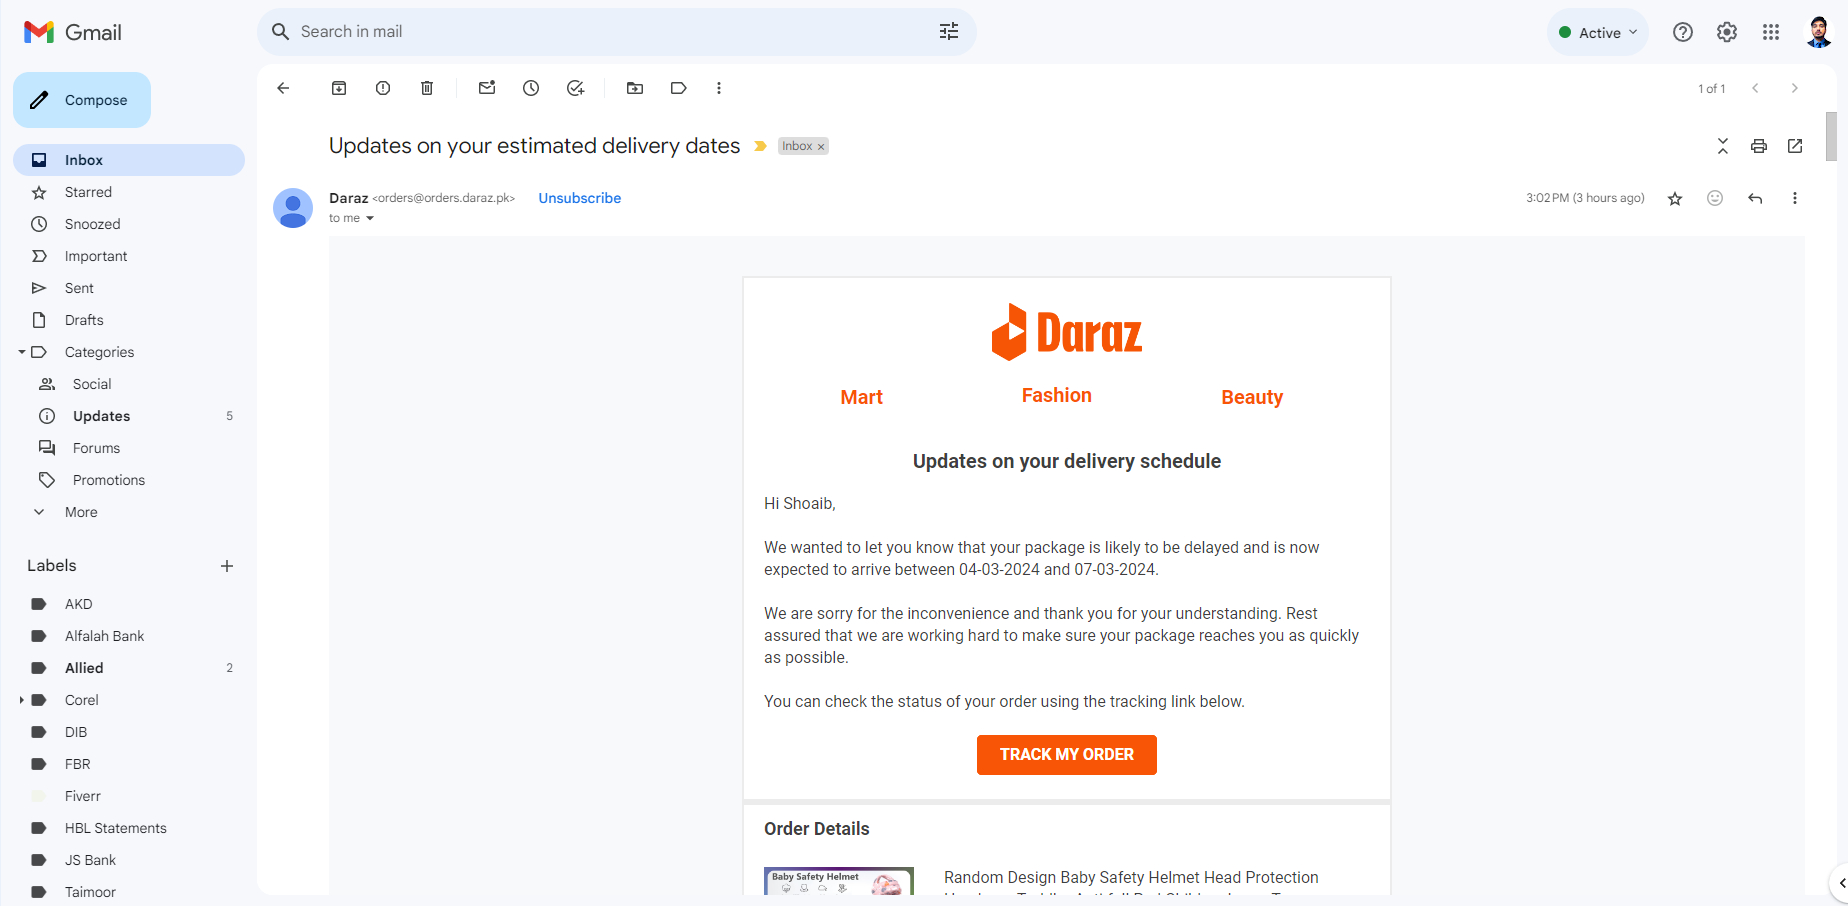 Daraz PK Reviews - 136 Reviews of Daraz.pk